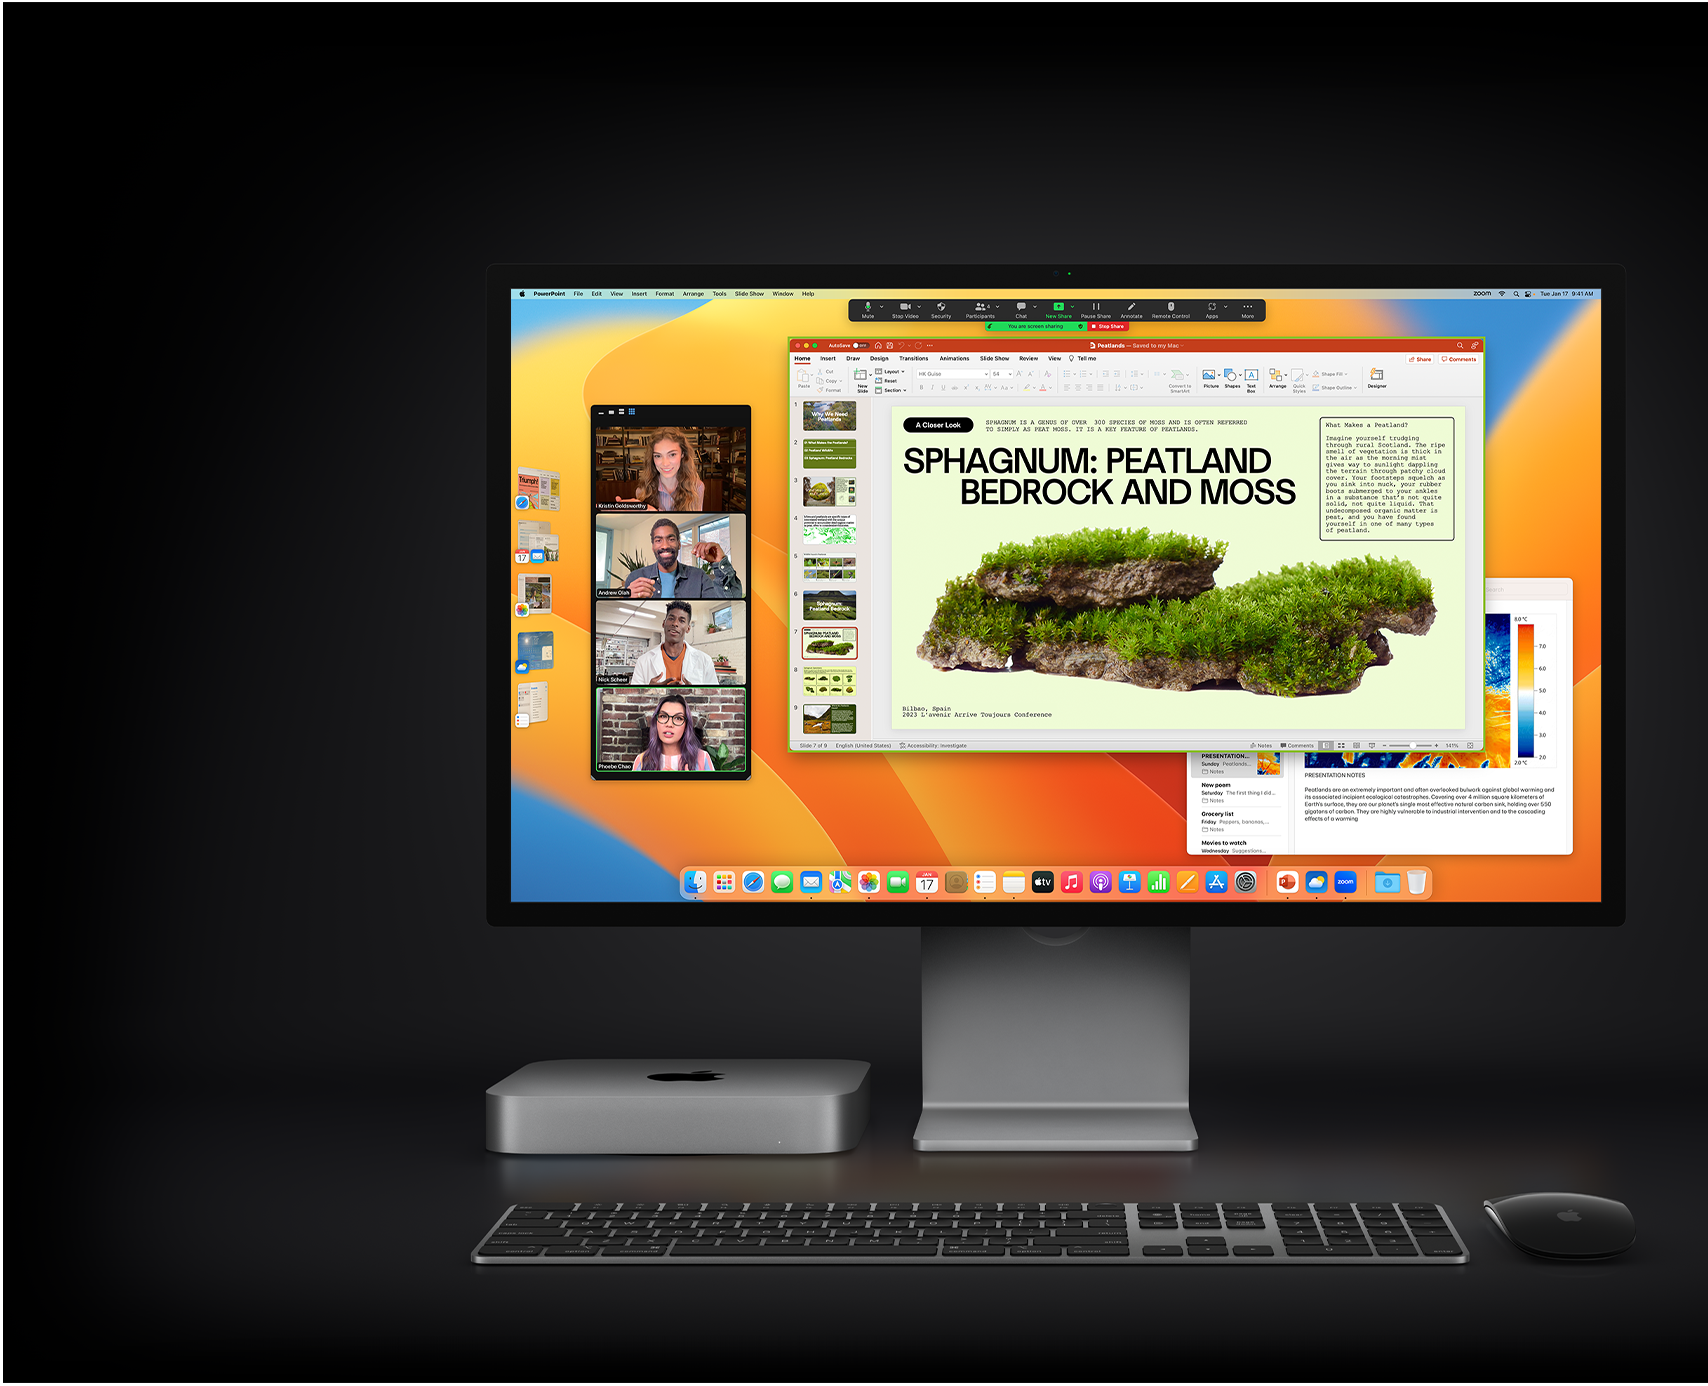 Mac mini พร้อม Magic Mouse, Magic Keyboard และ Studio Display แสดงงานนำเสนอ Microsoft PowerPoint ที่กำลังแชร์ในการประชุมผ่าน Zoom พร้อมแอปโน้ตที่อยู่ข้างหลัง